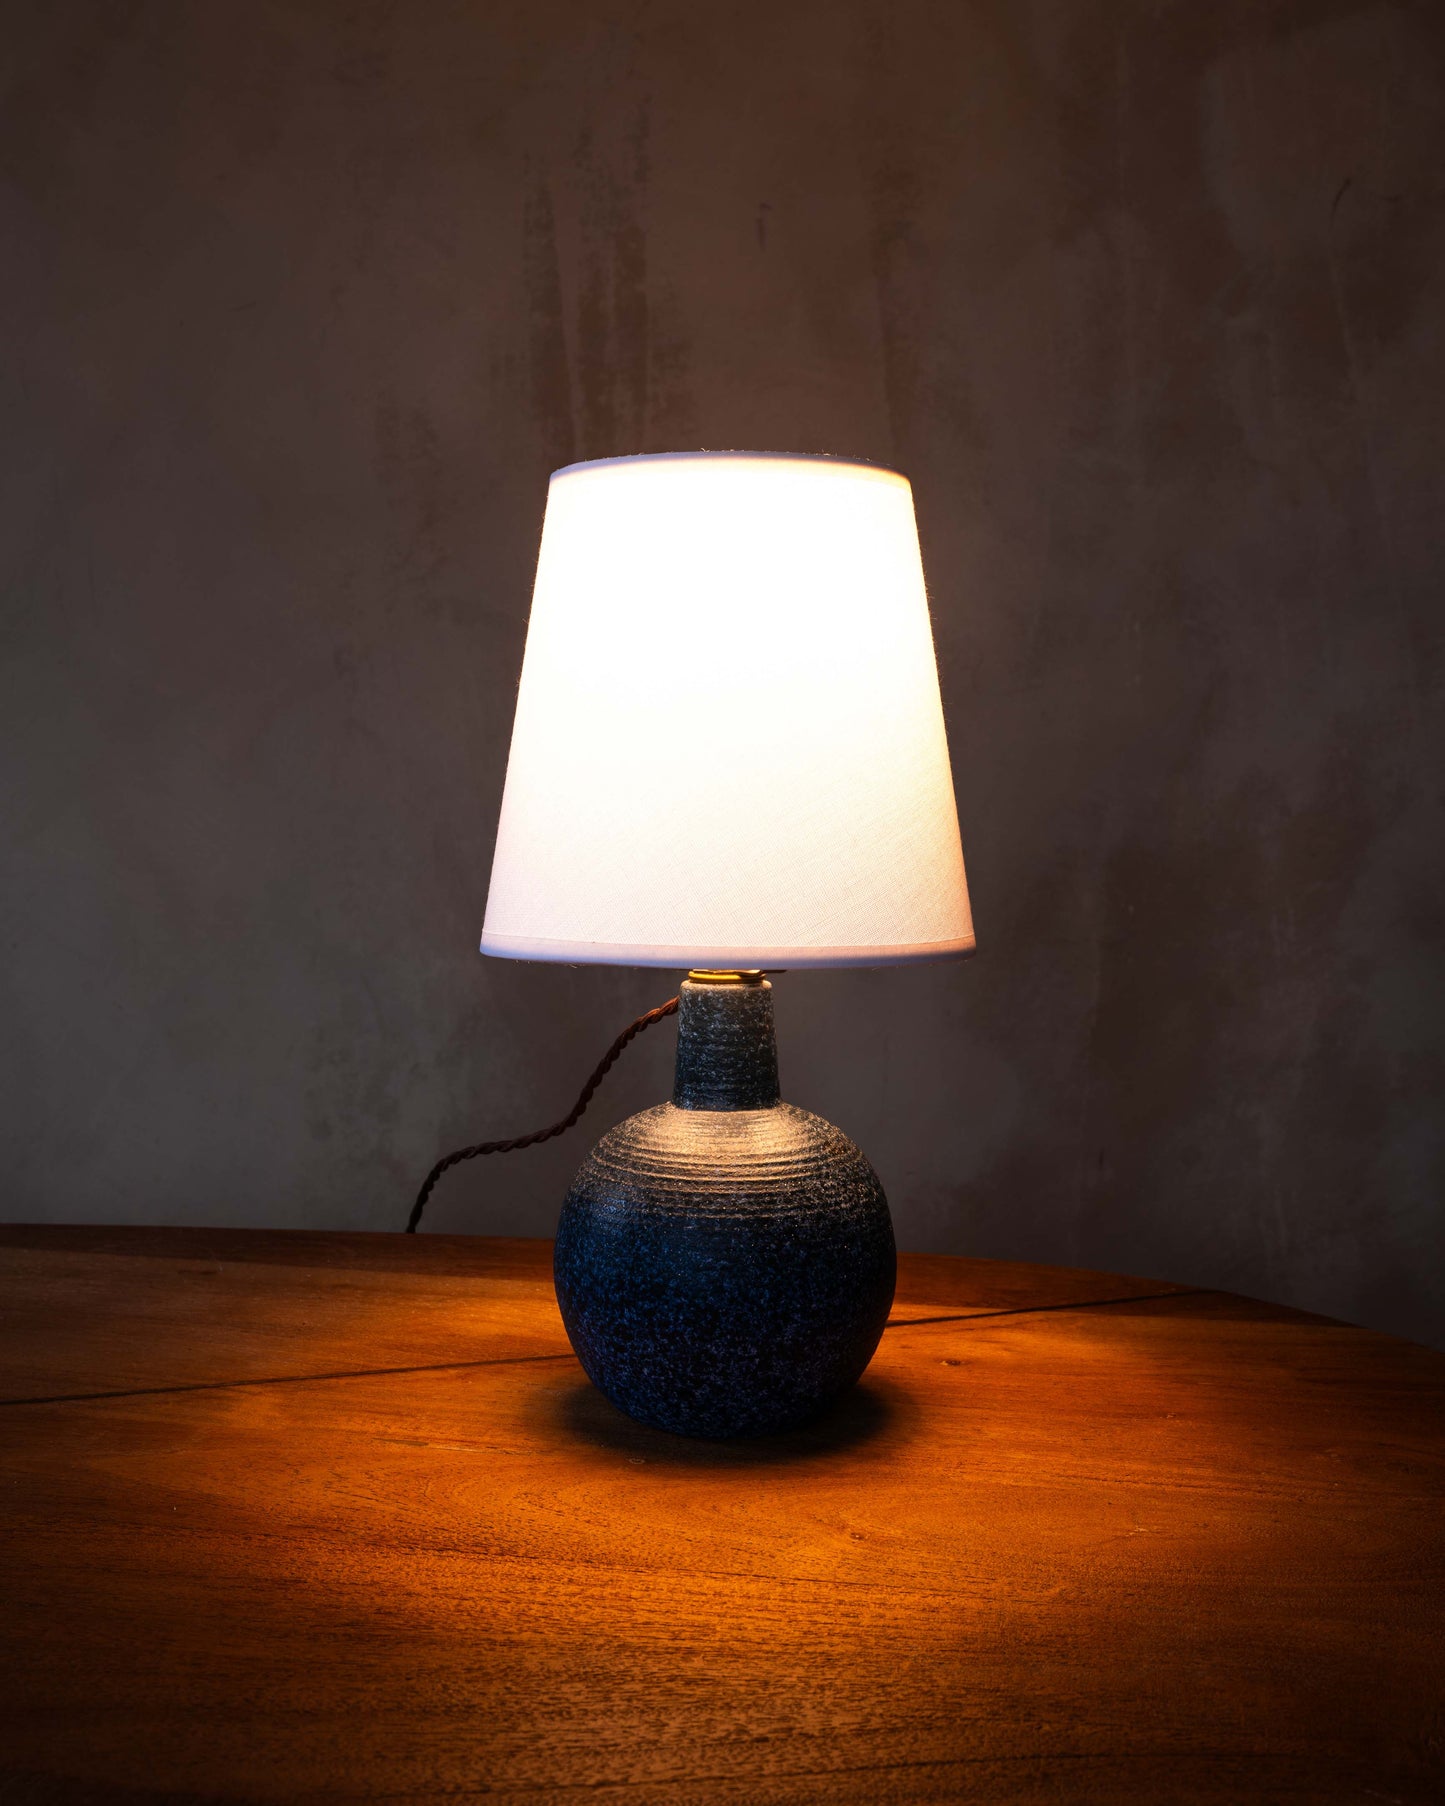 Blue Sphere Ceramic Table Lamp